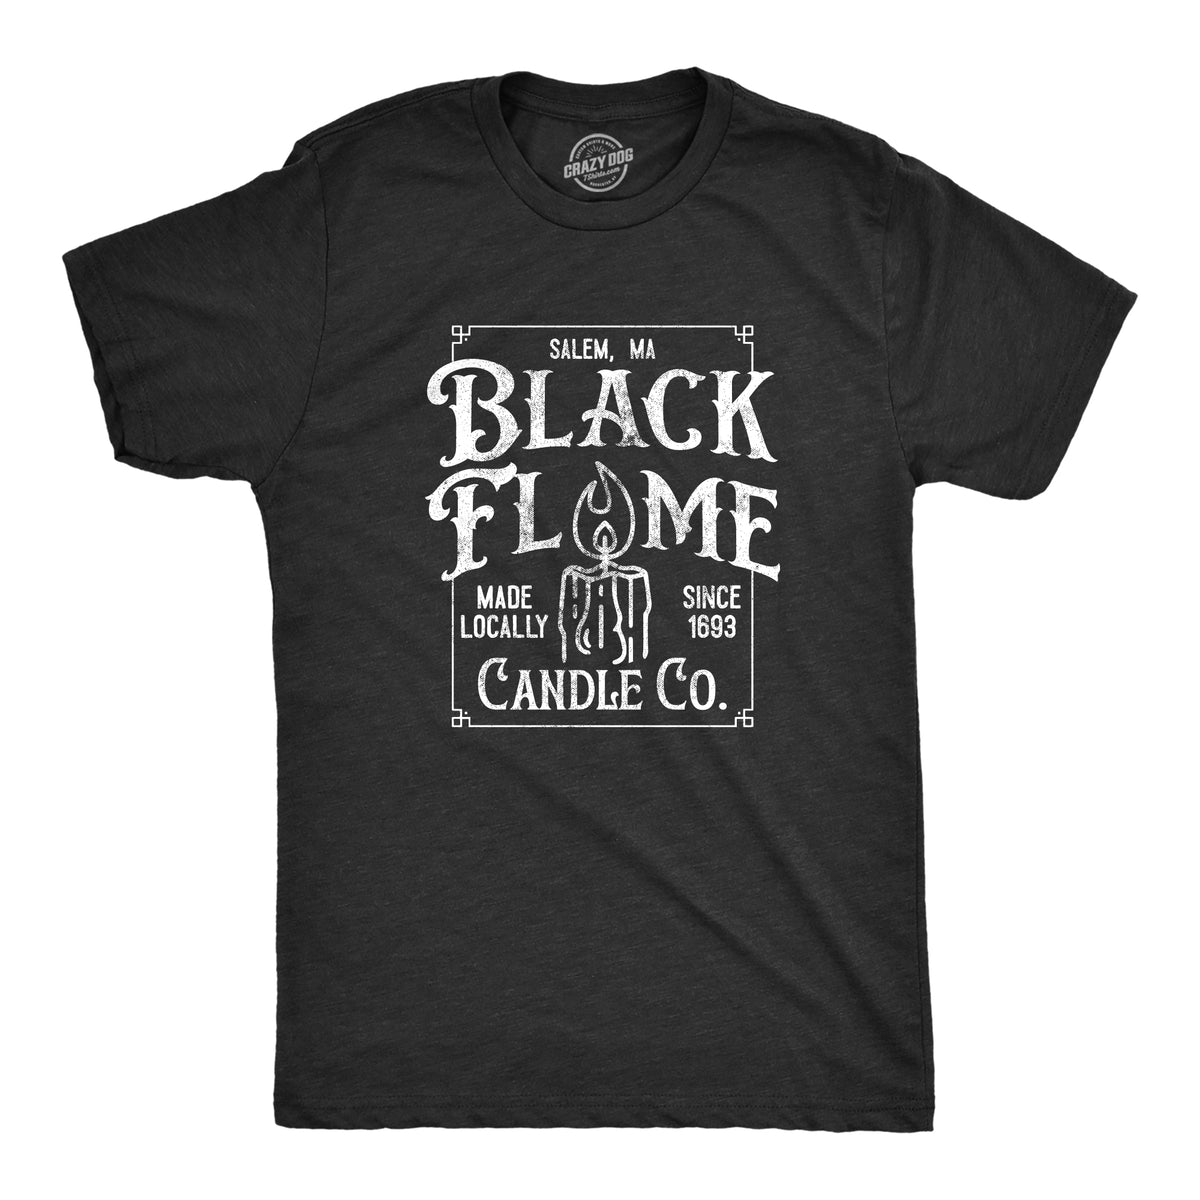 Funny Heather Black - BLACKFLAME Black Flame Candle Co Mens T Shirt Nerdy Halloween Tee